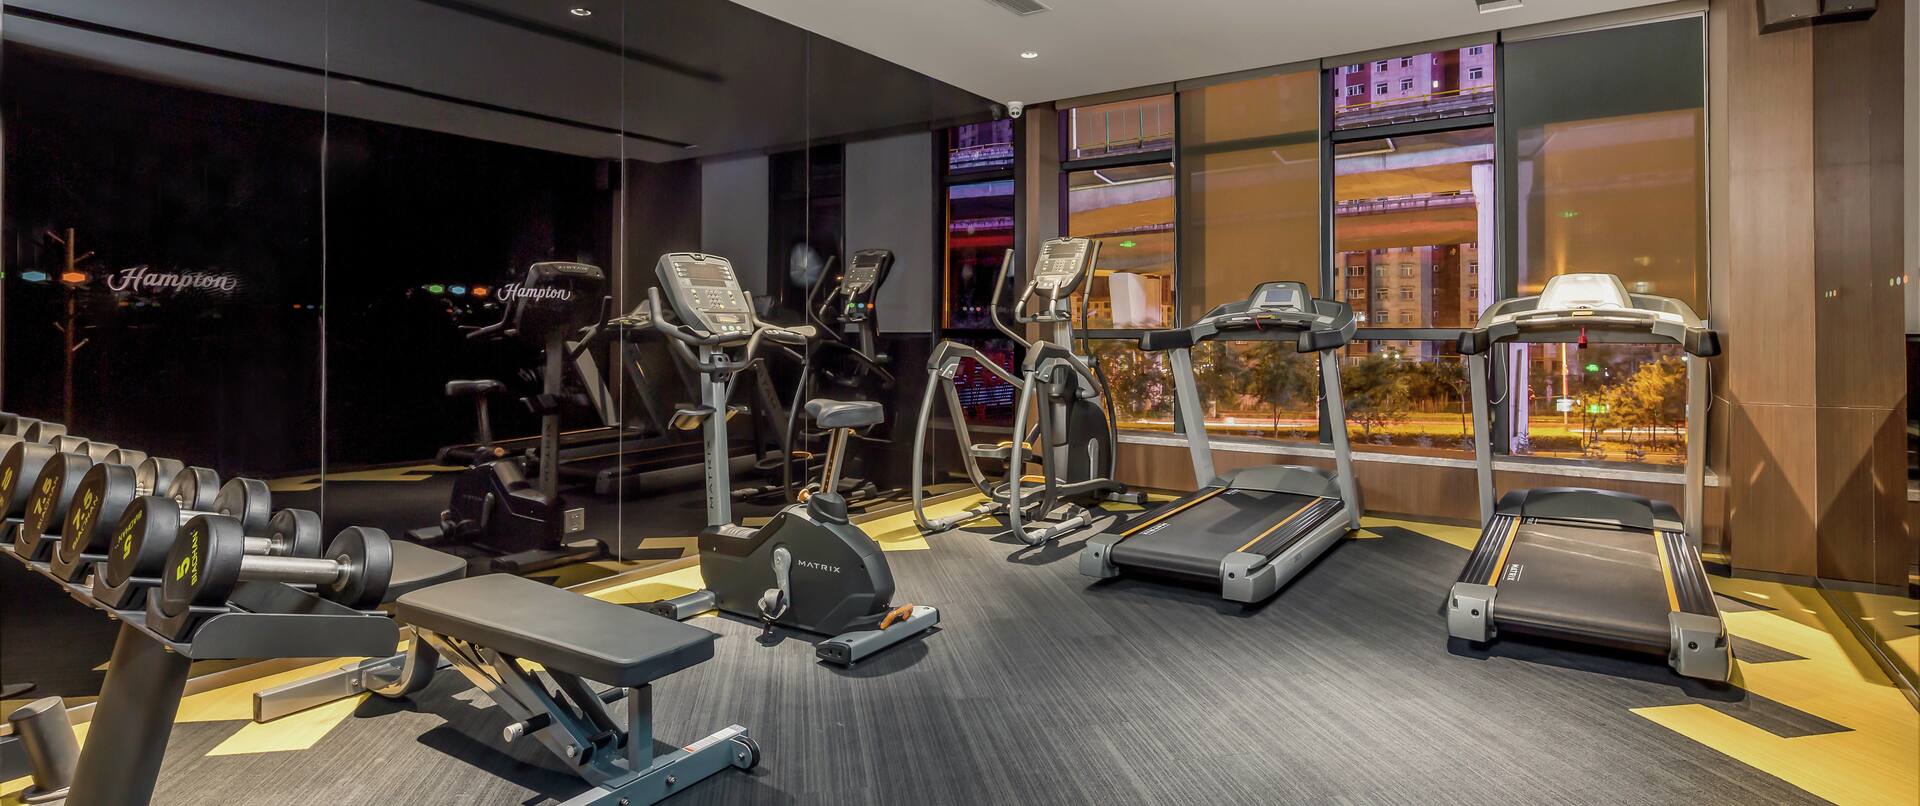 Fitness Room with Treadmills